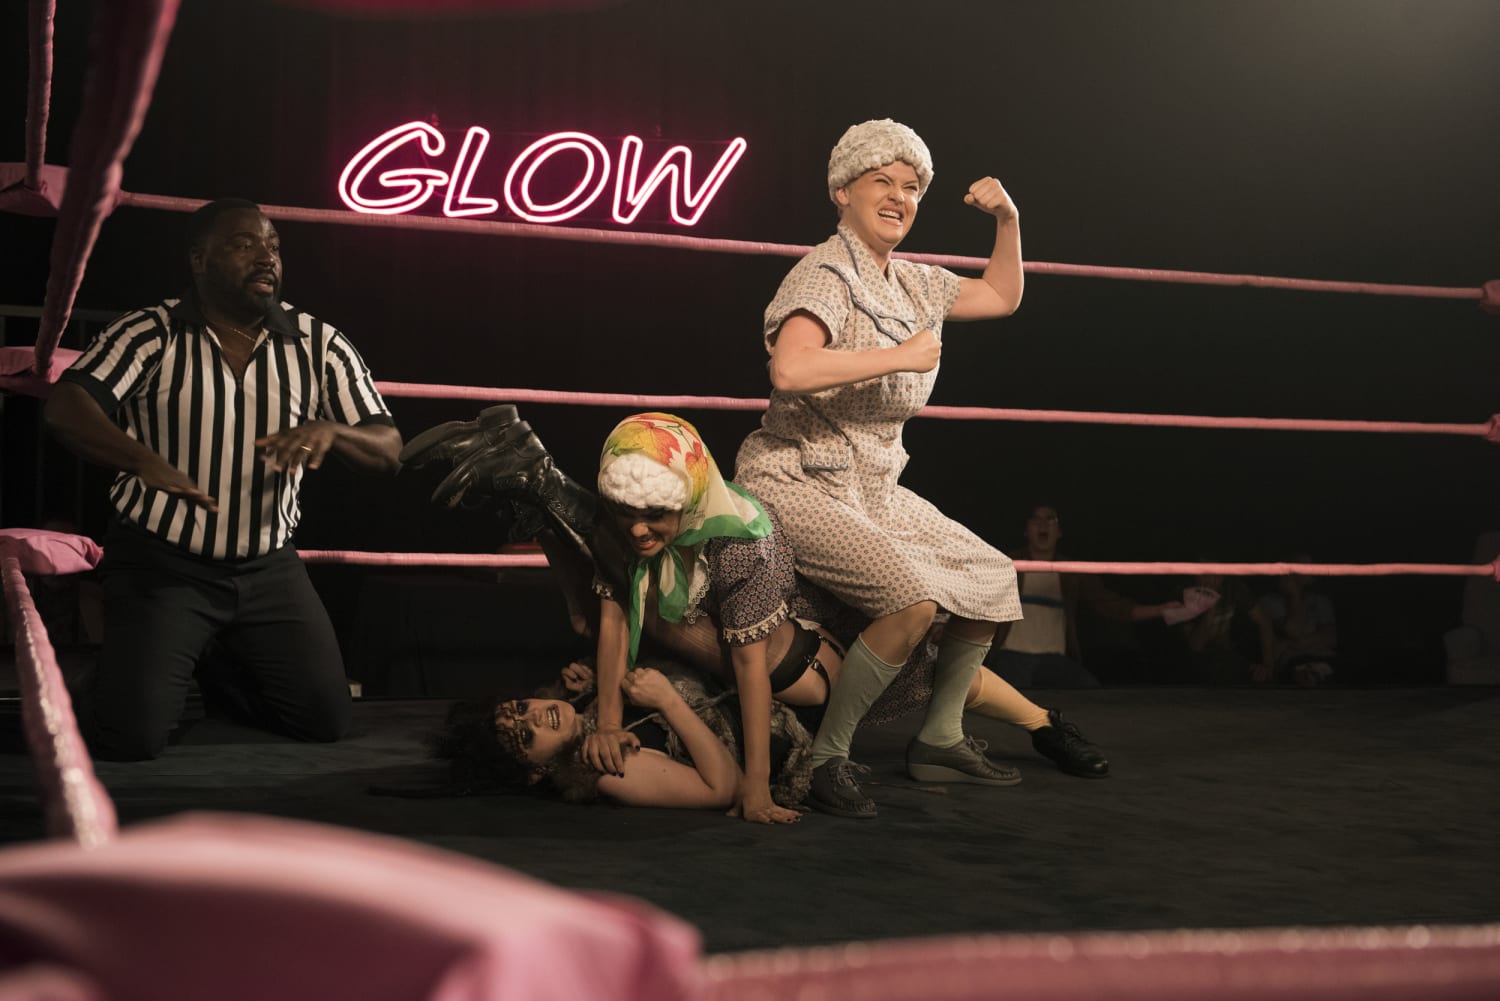 Netflix's 'Wrestlers' Isn't Just for Pro Wrestling Fans